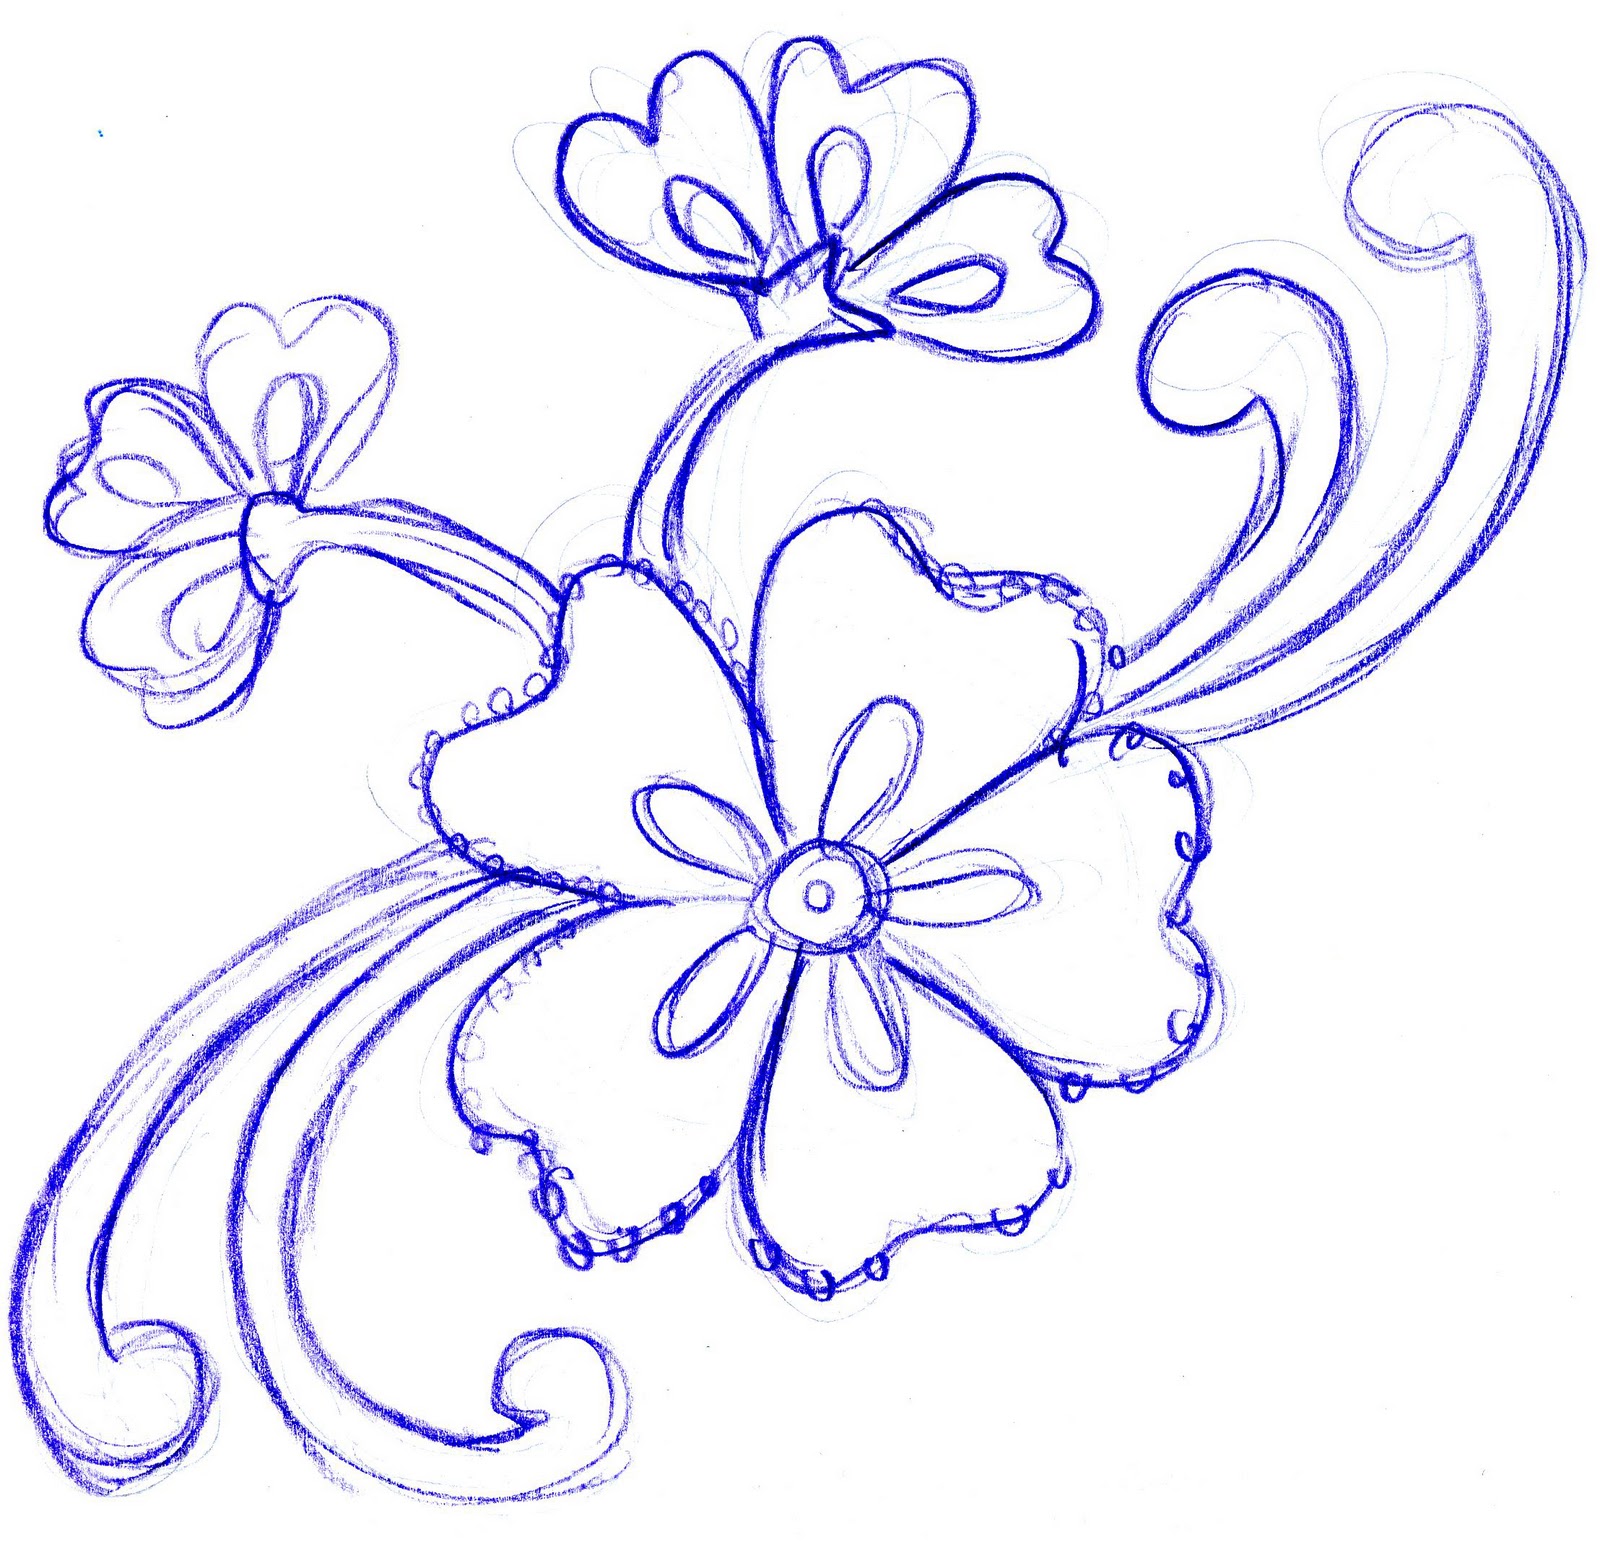  design of a flower